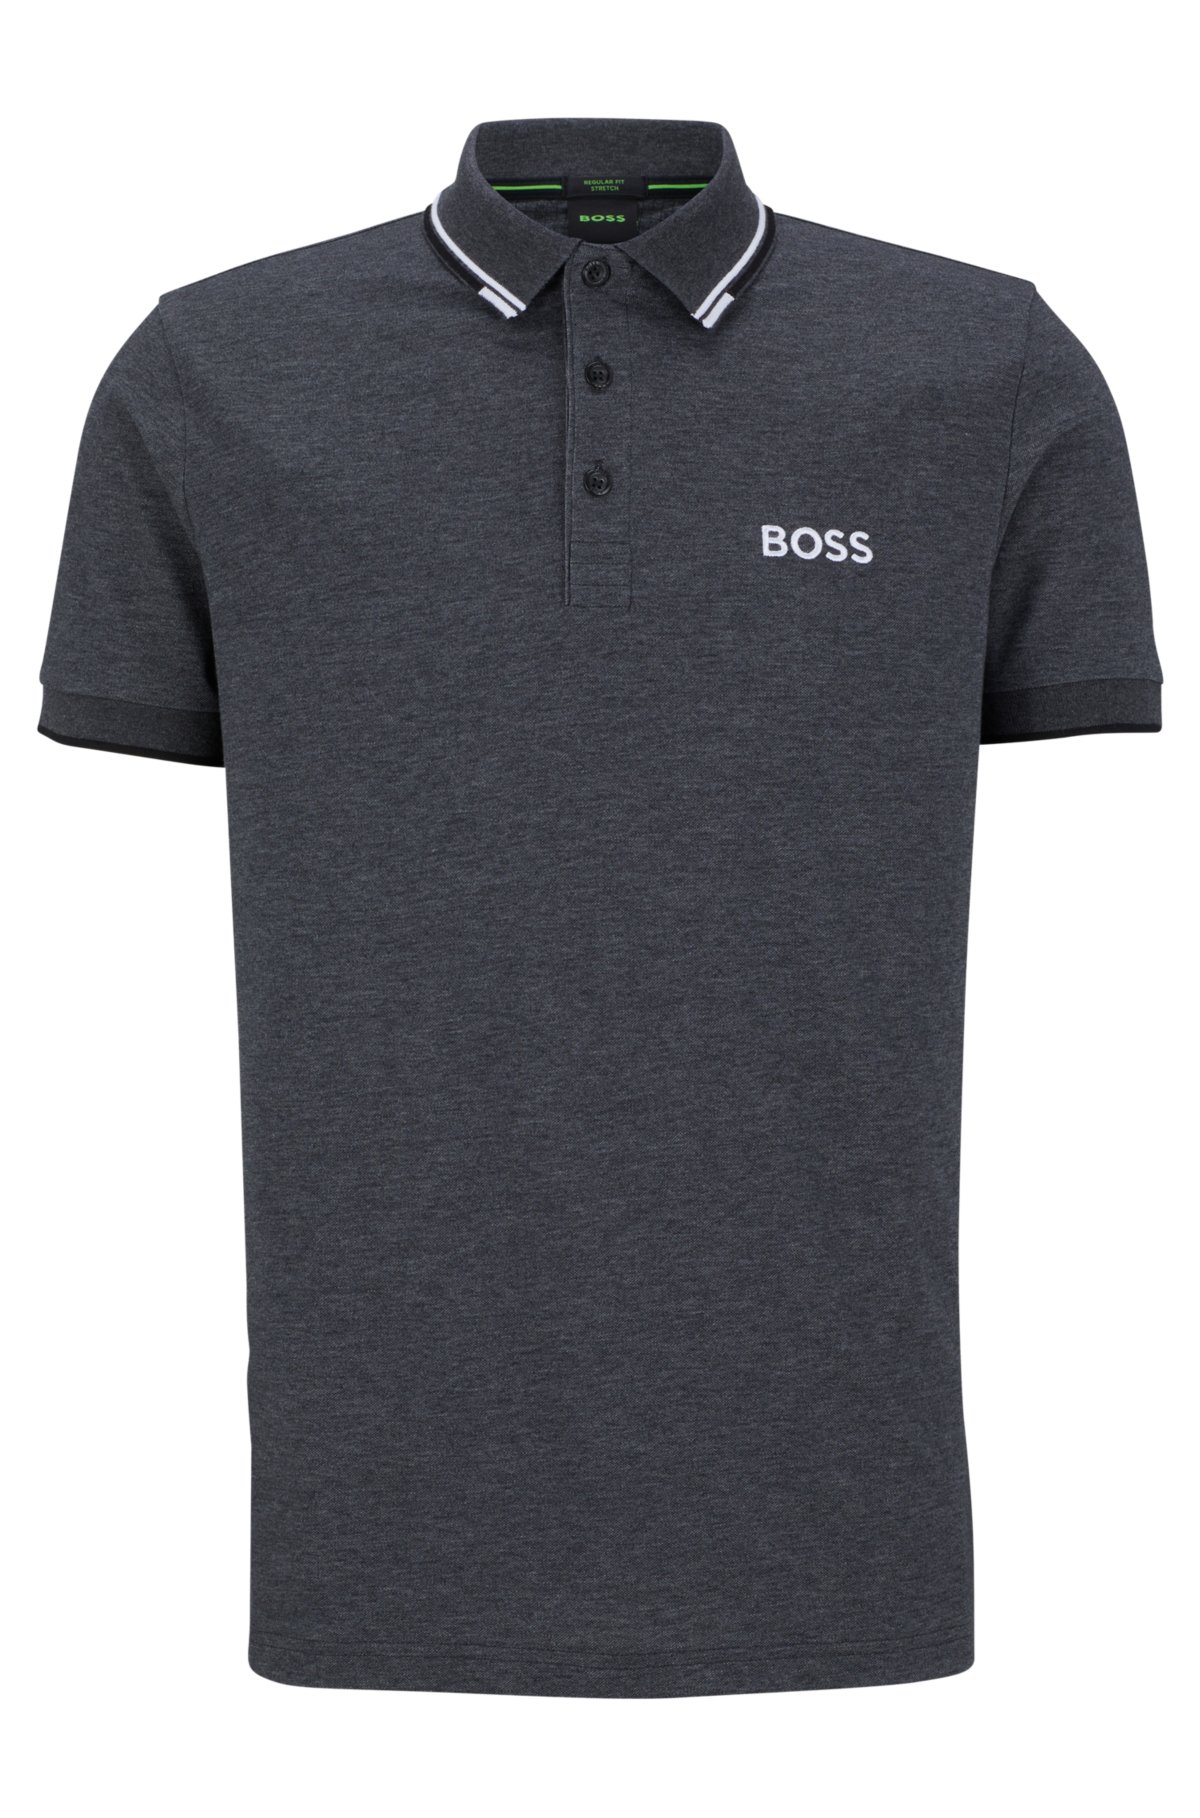 HUGO BOSS Polo Shirts – Elaborate designs